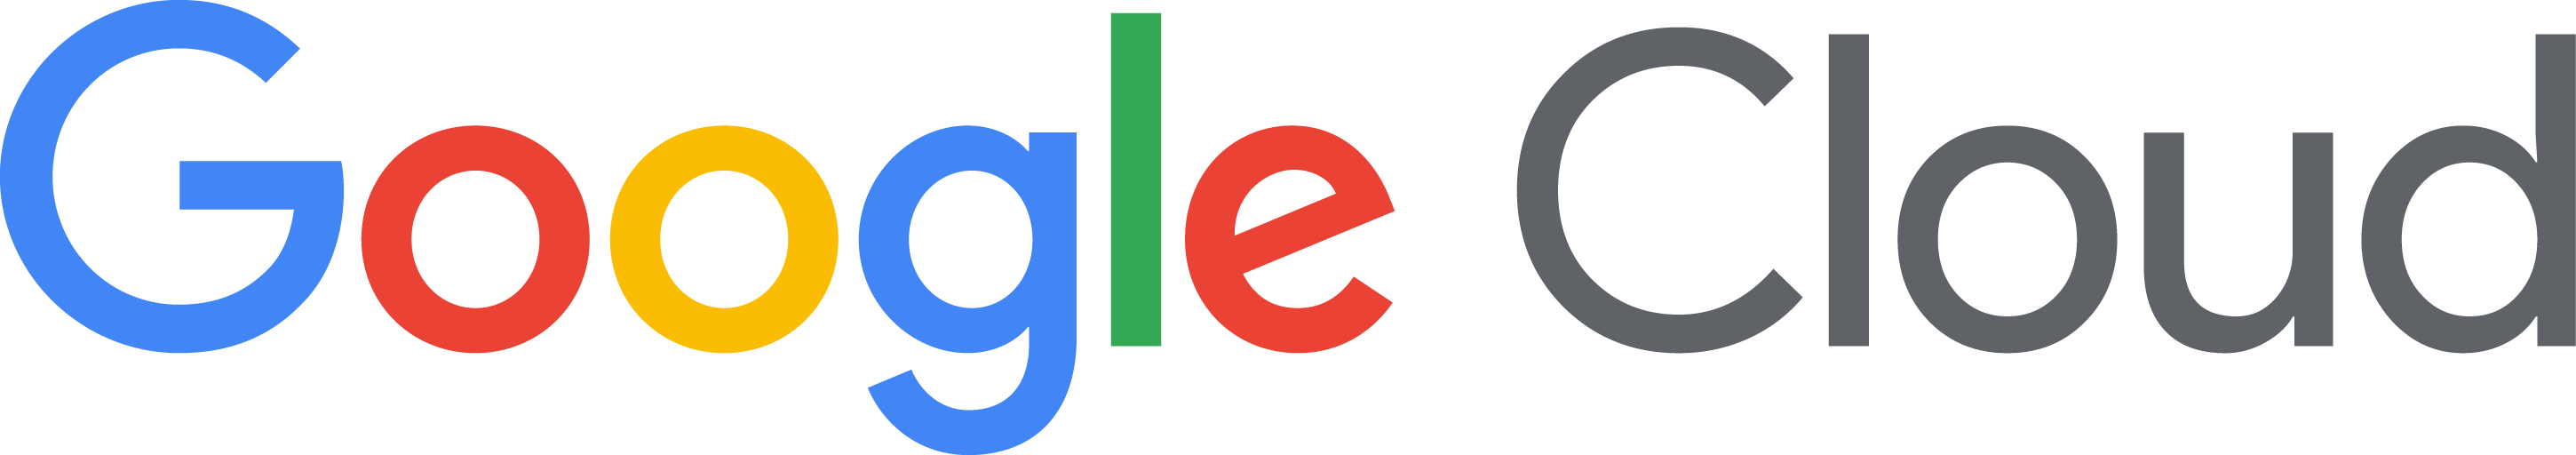 “Logo